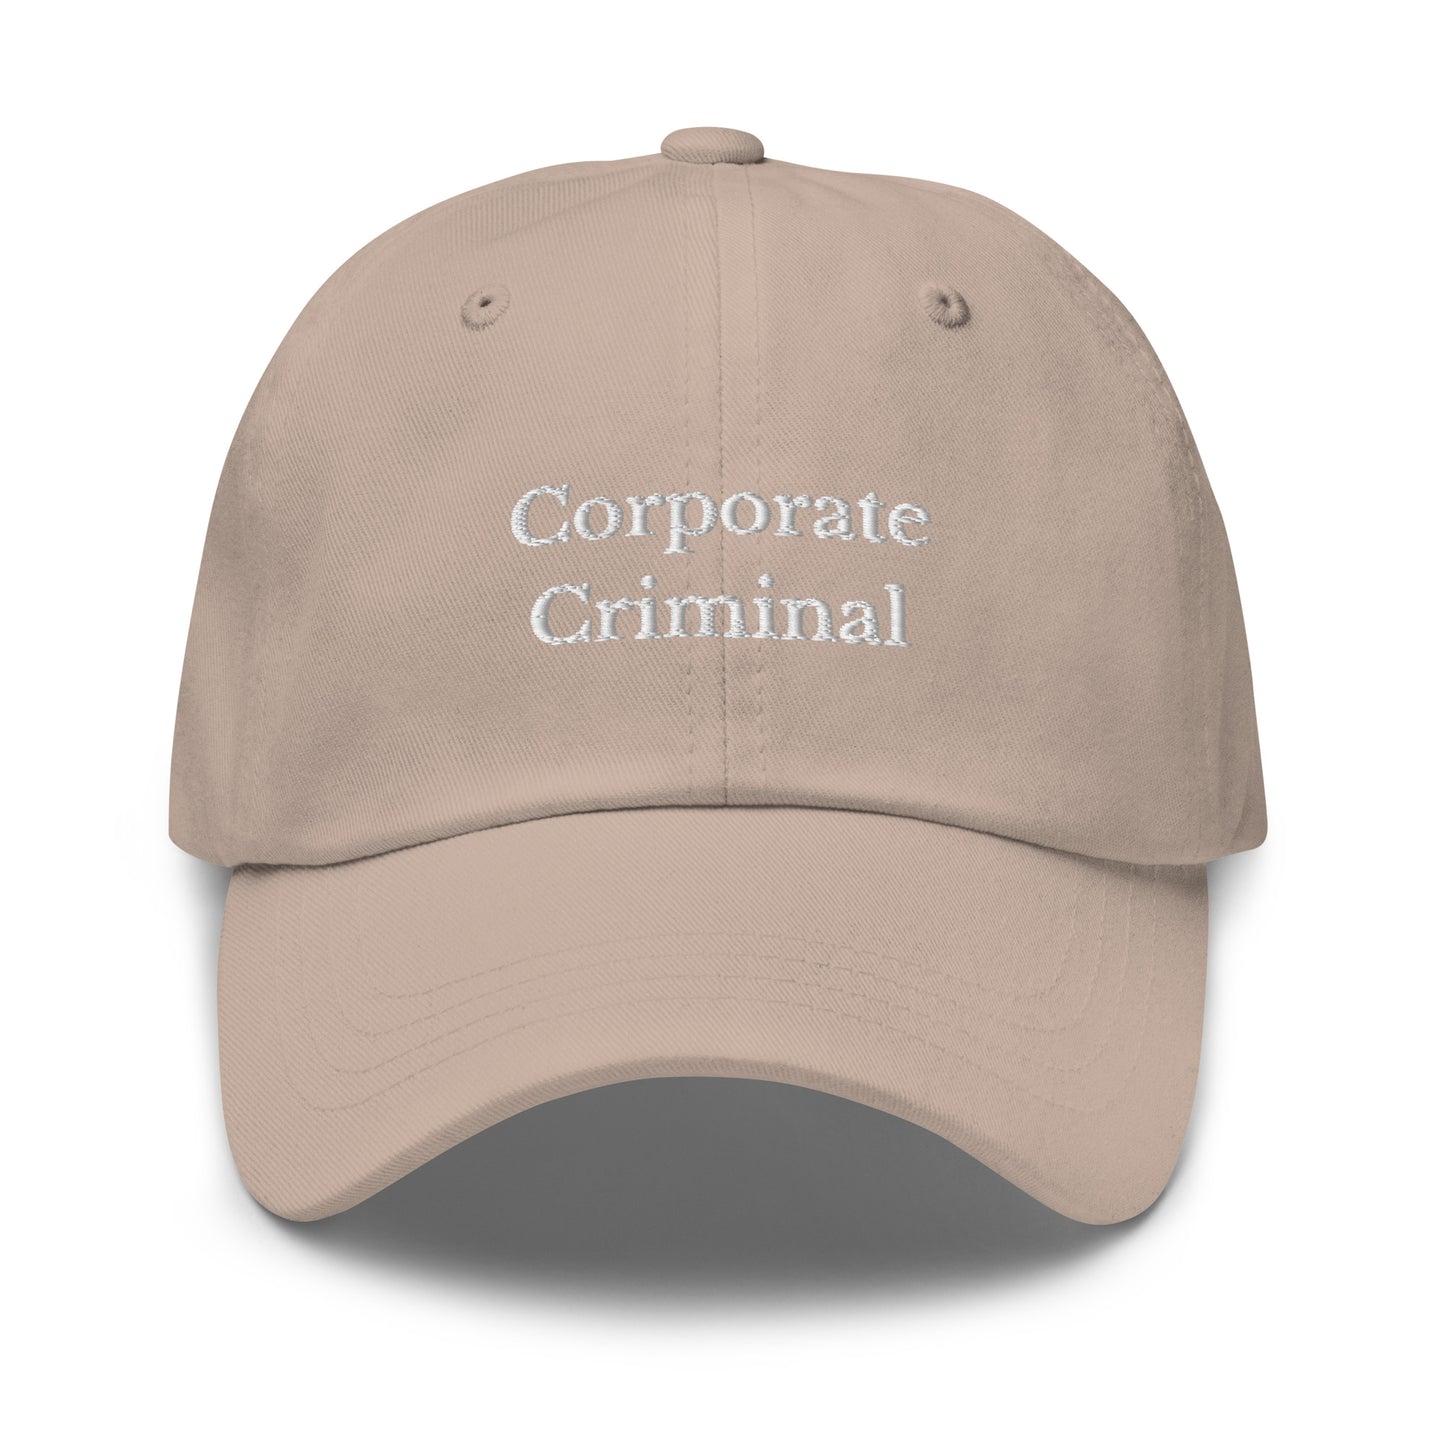 Corporate Criminal Cap